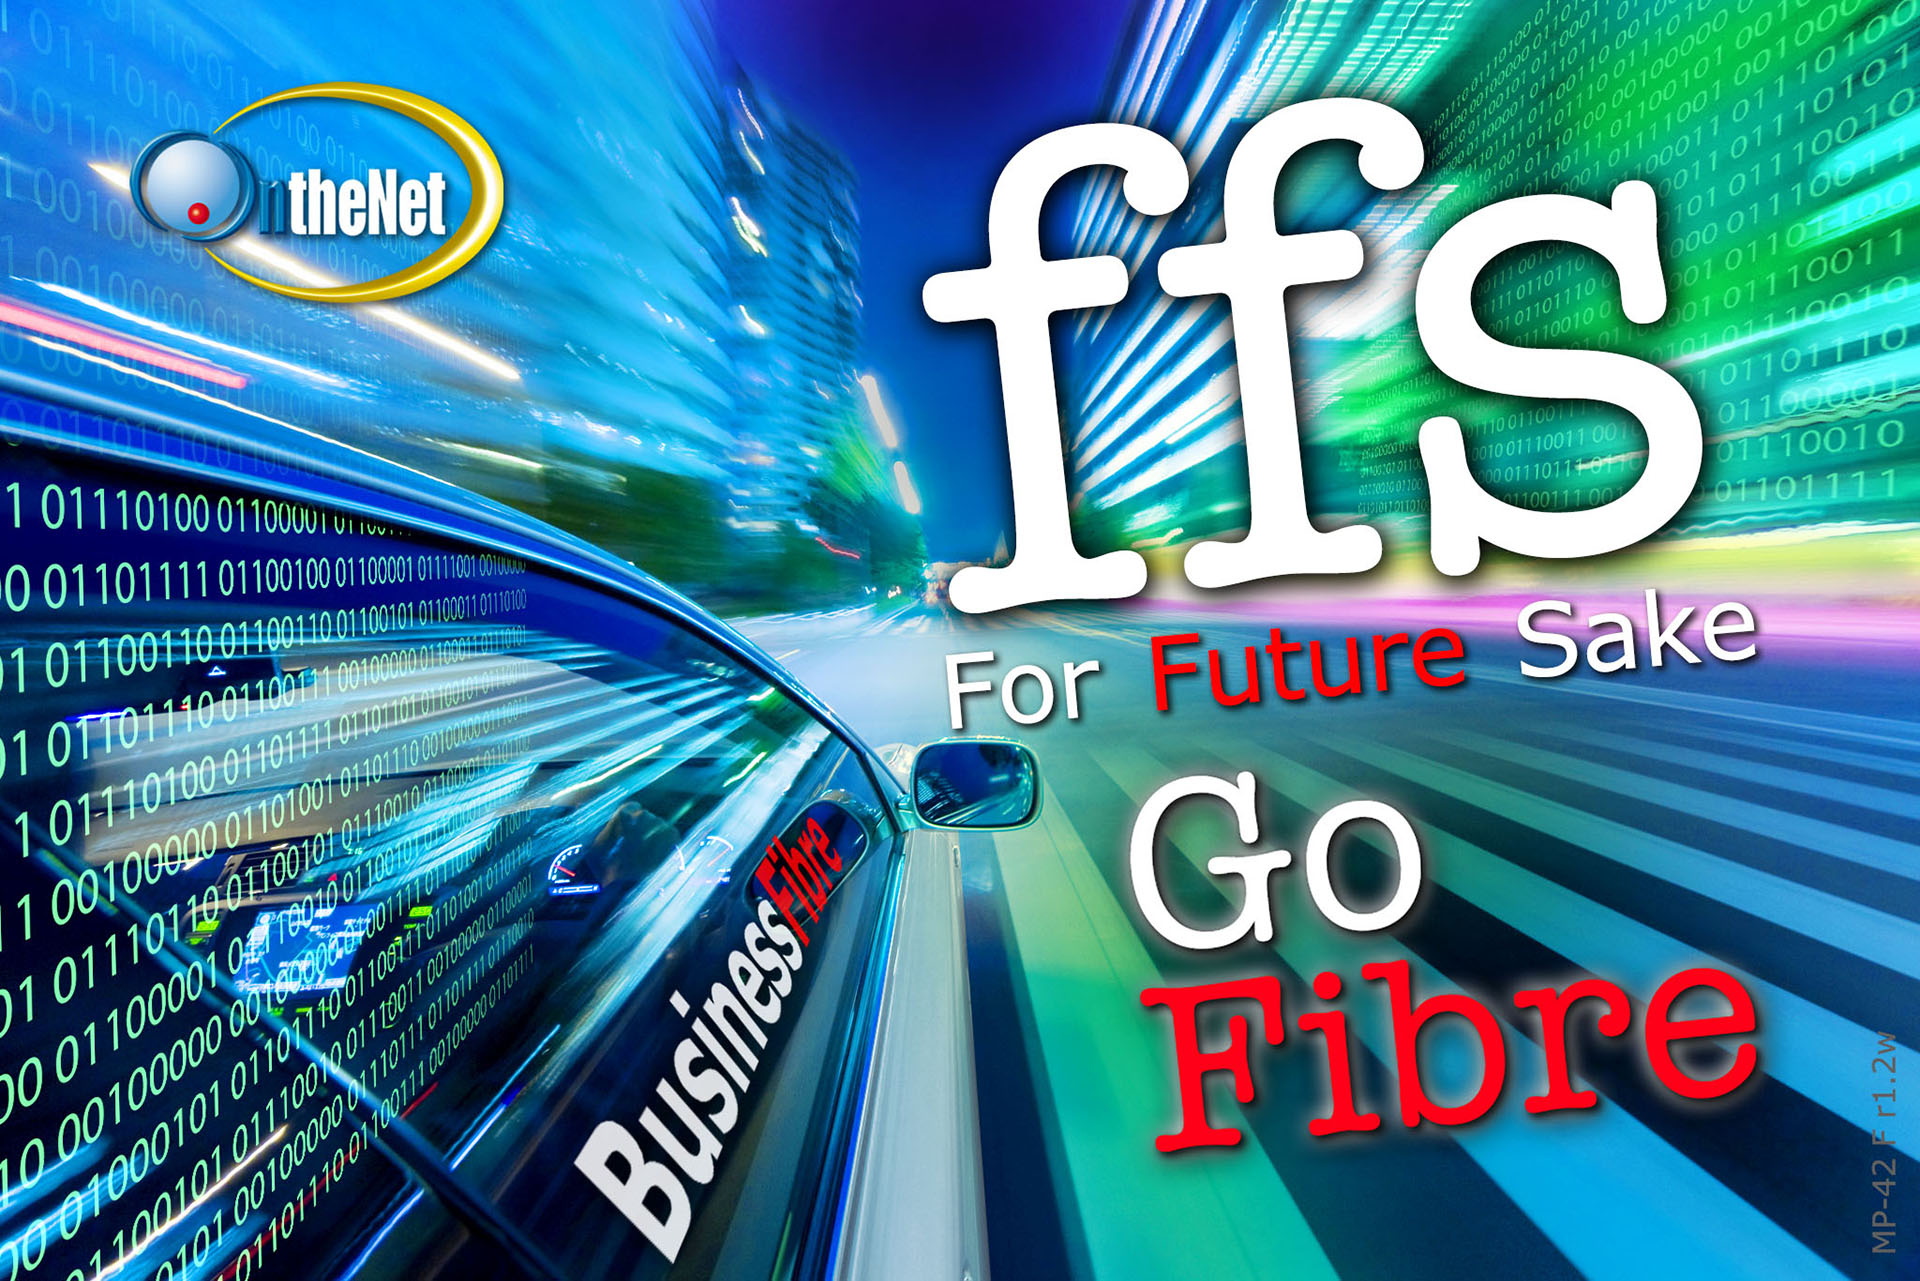 for future sakes - Go Fibre